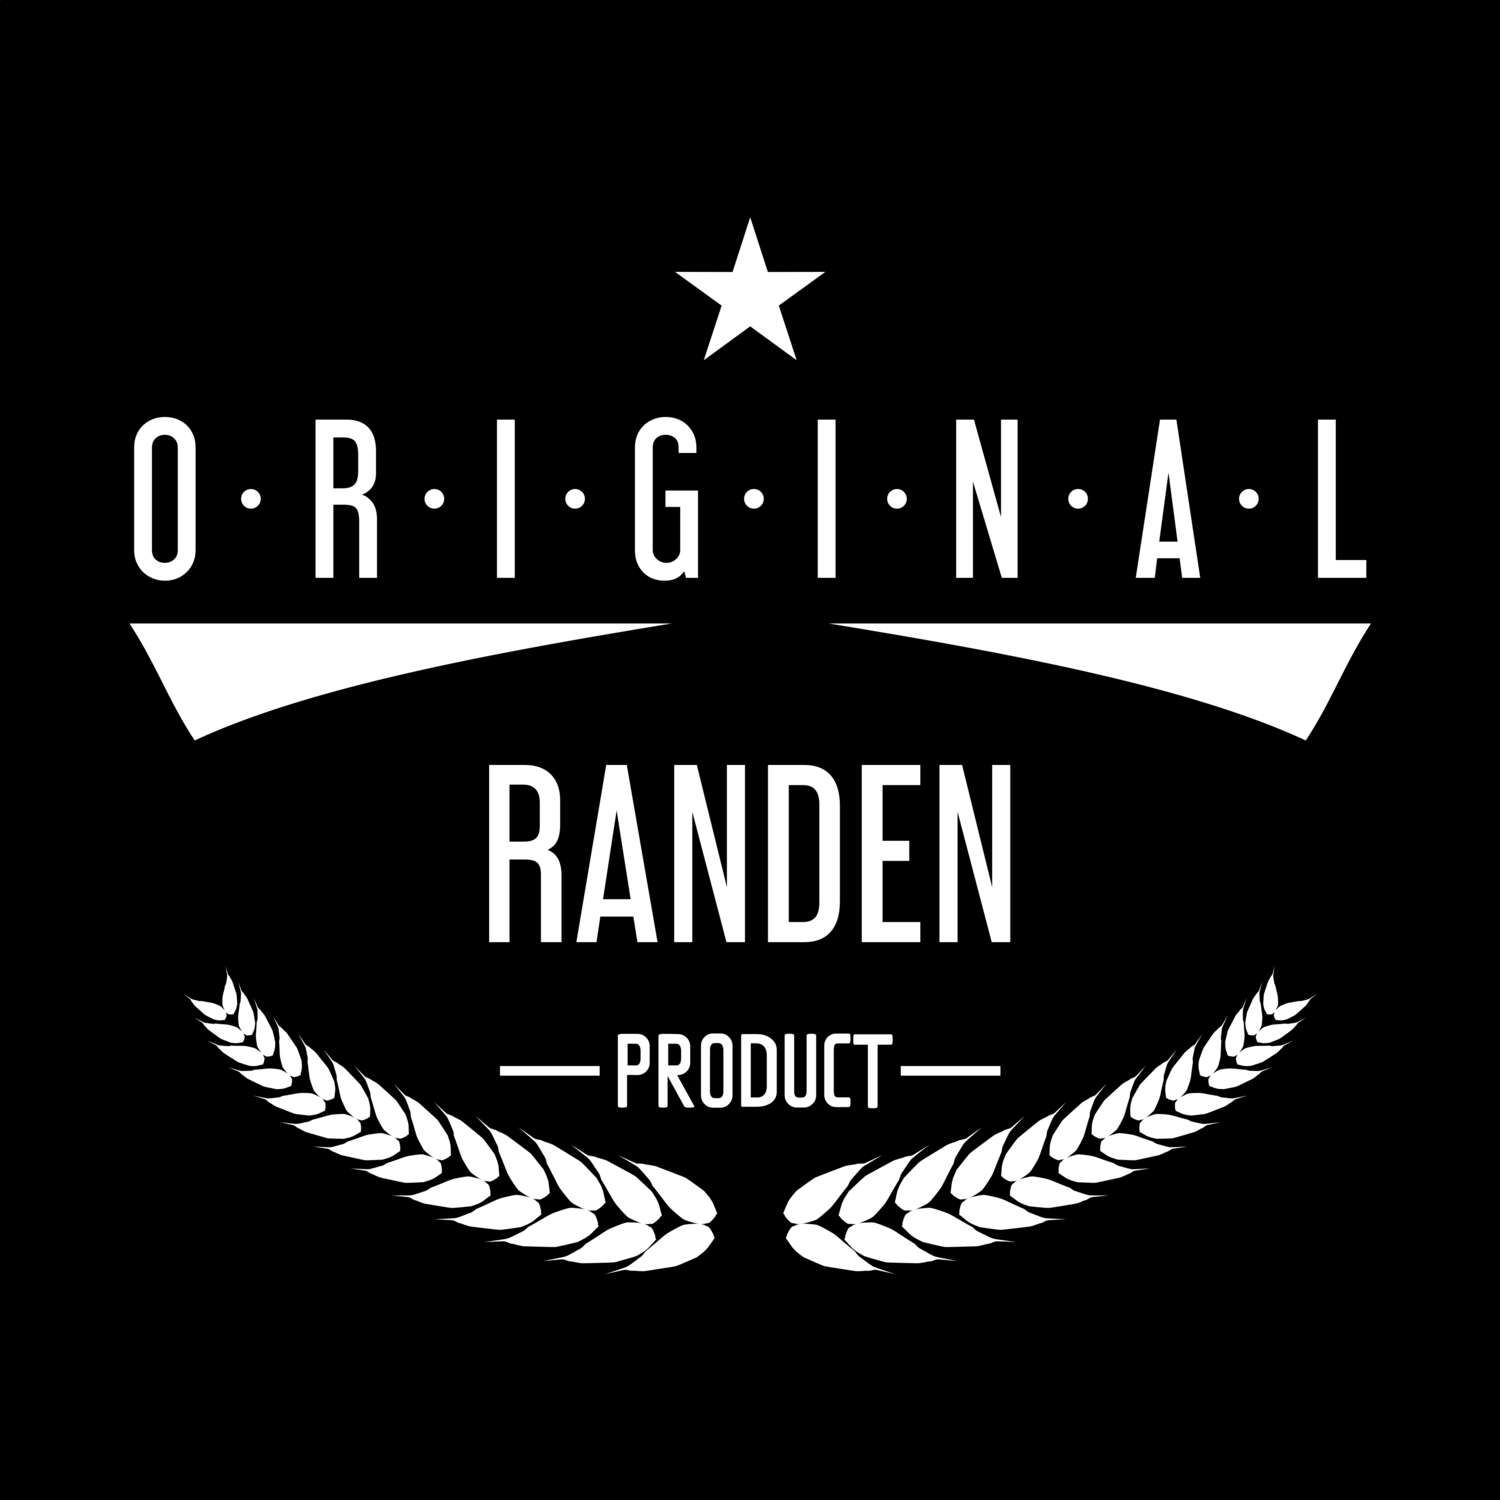 Randen T-Shirt »Original Product«